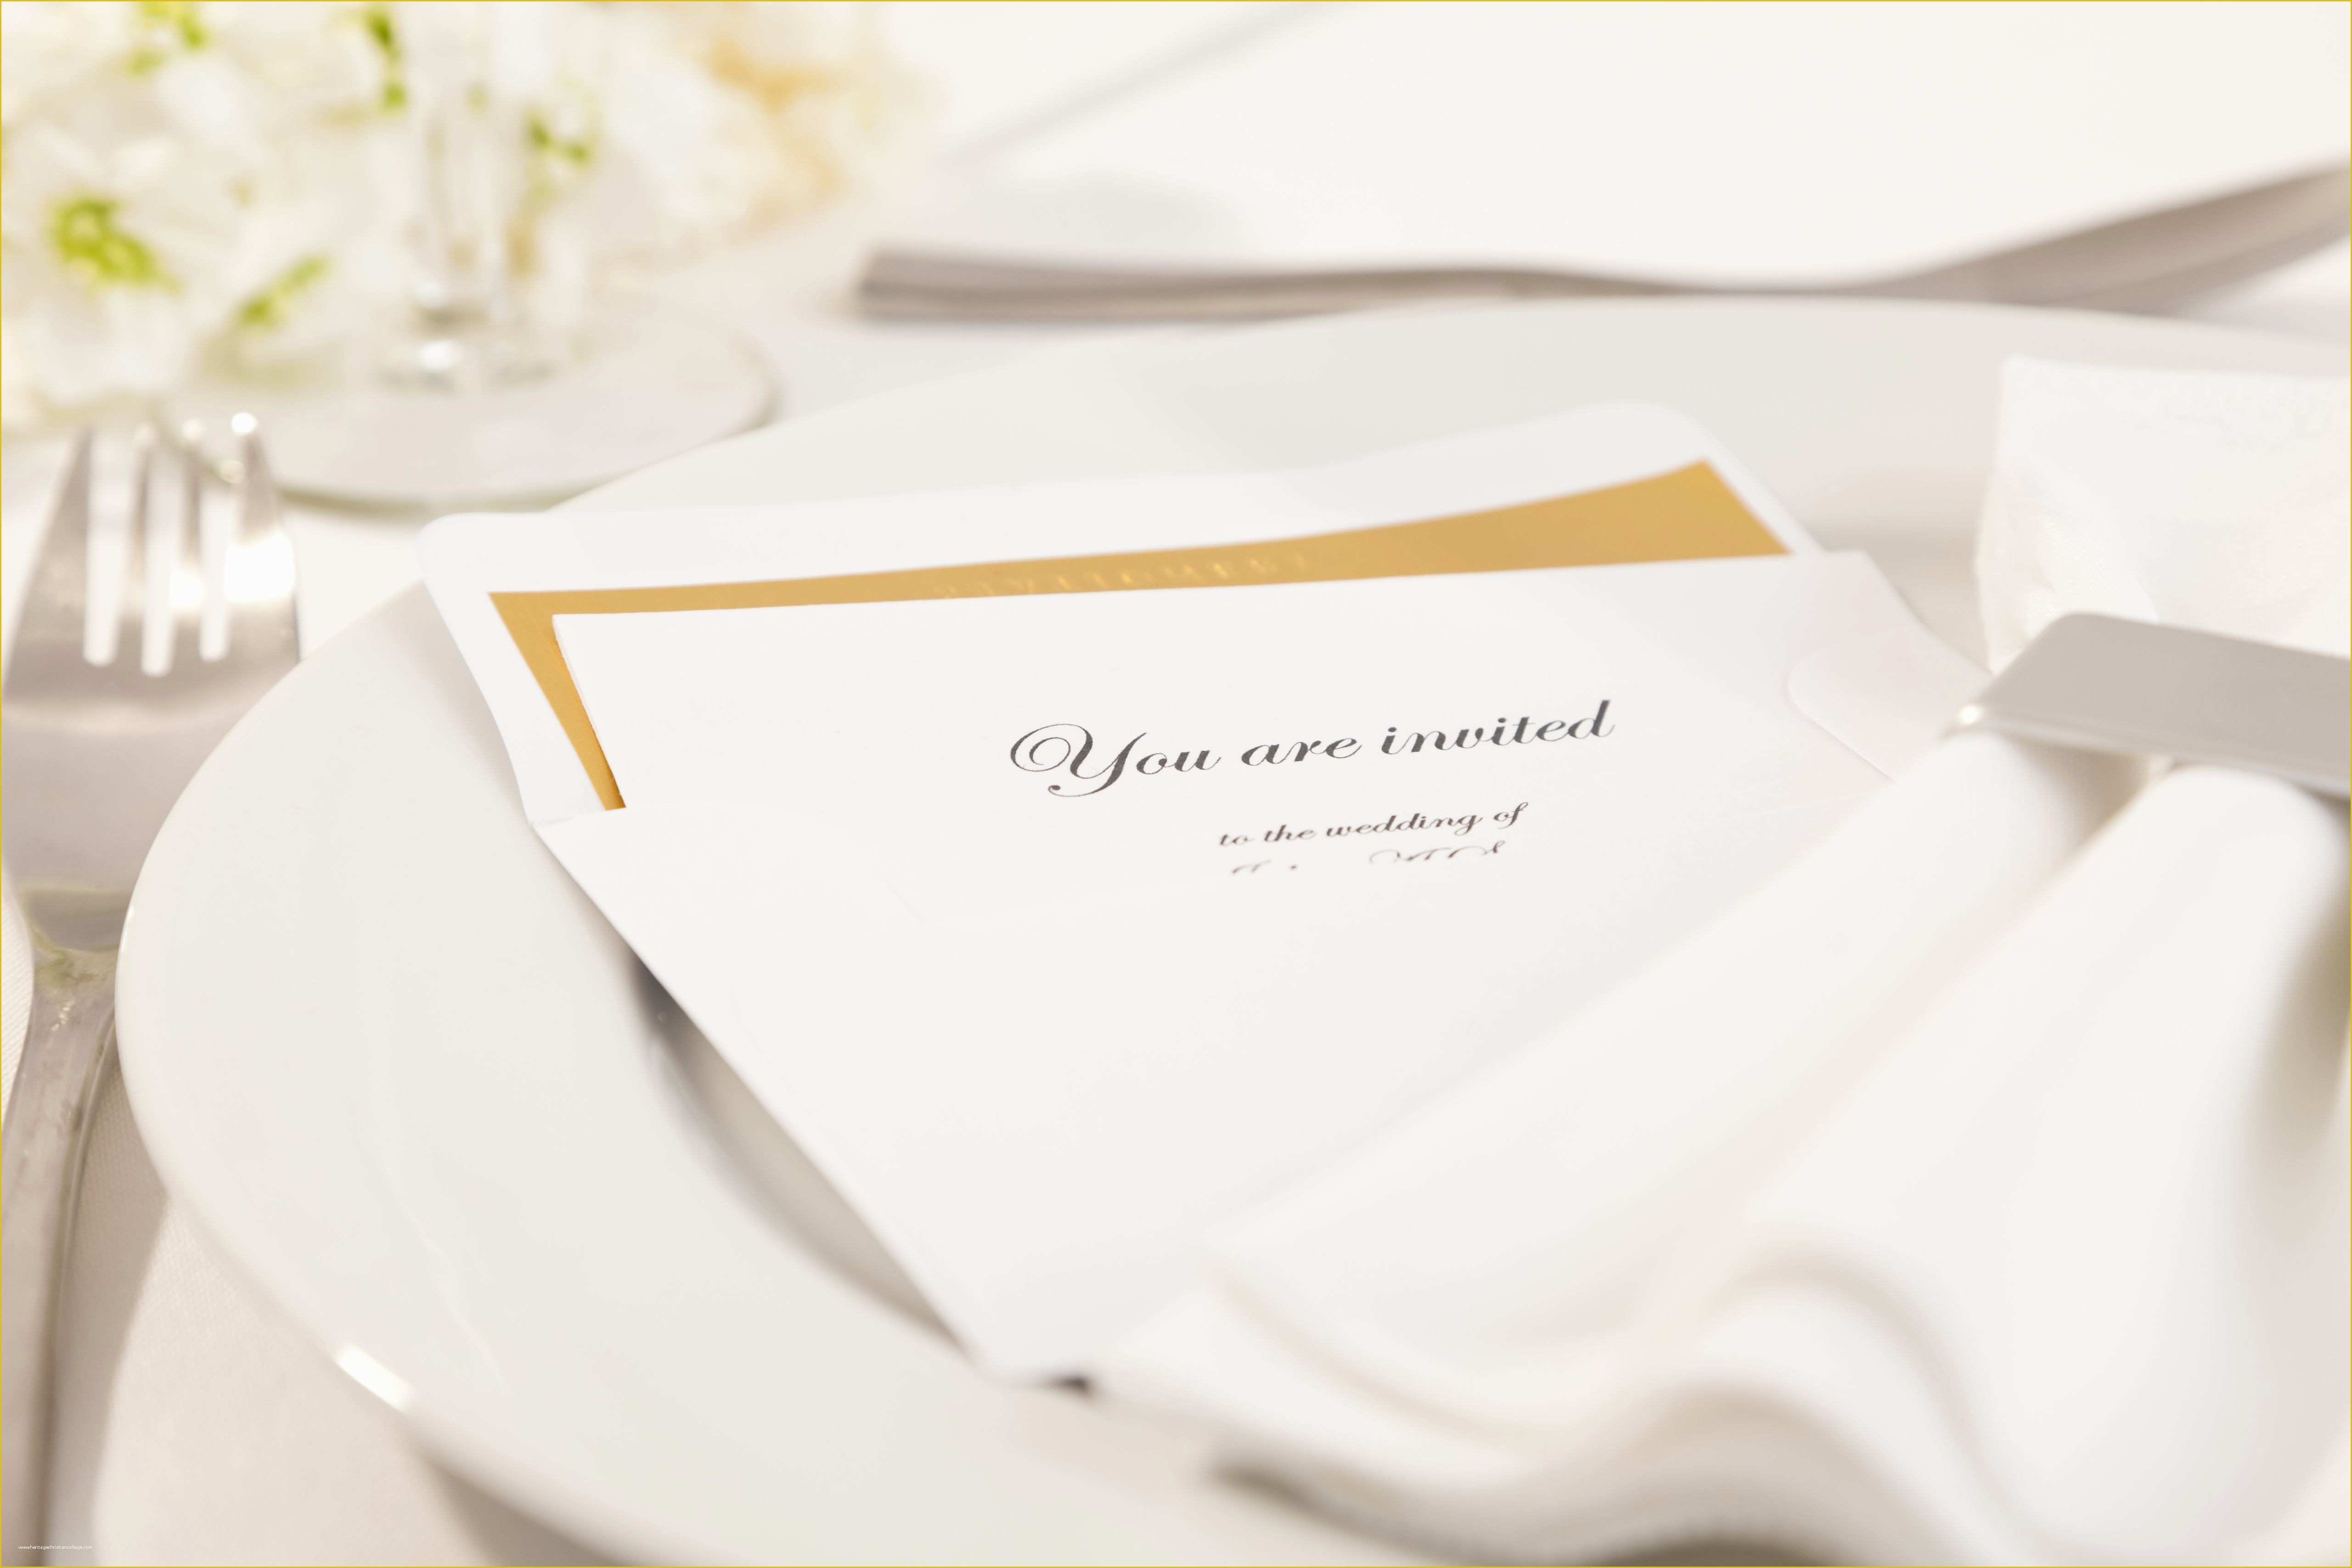 Free Wedding Design Templates Of 550 Free Wedding Invitation Templates You Can Customize